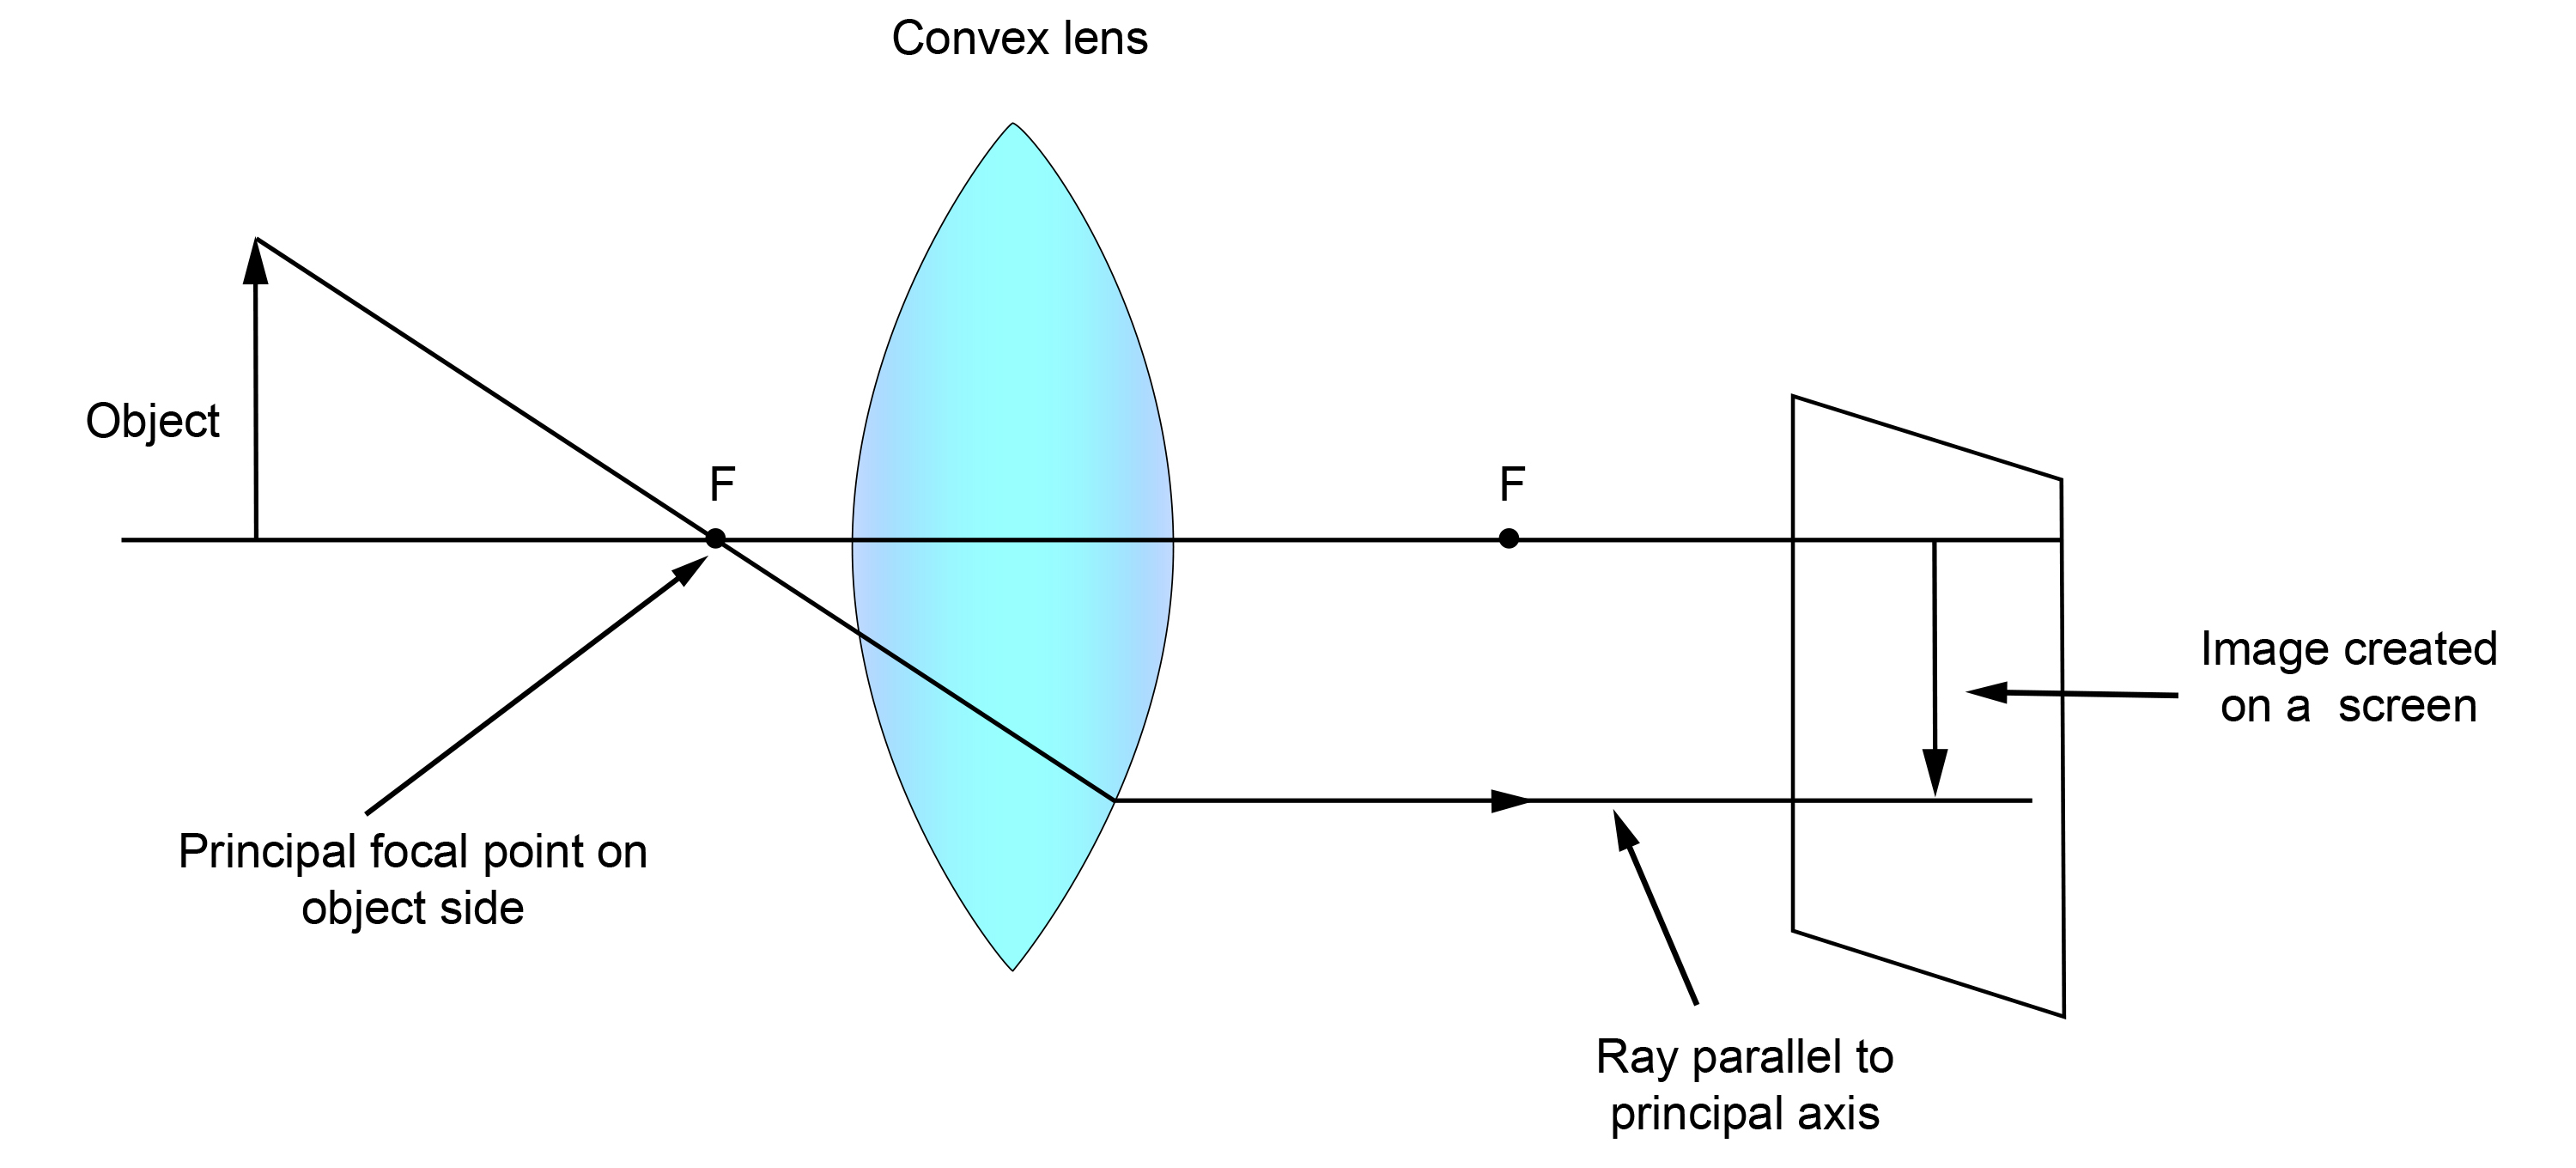 Lens Ray Diagrams Method For Drawing Ray Diagrams Convex Lens